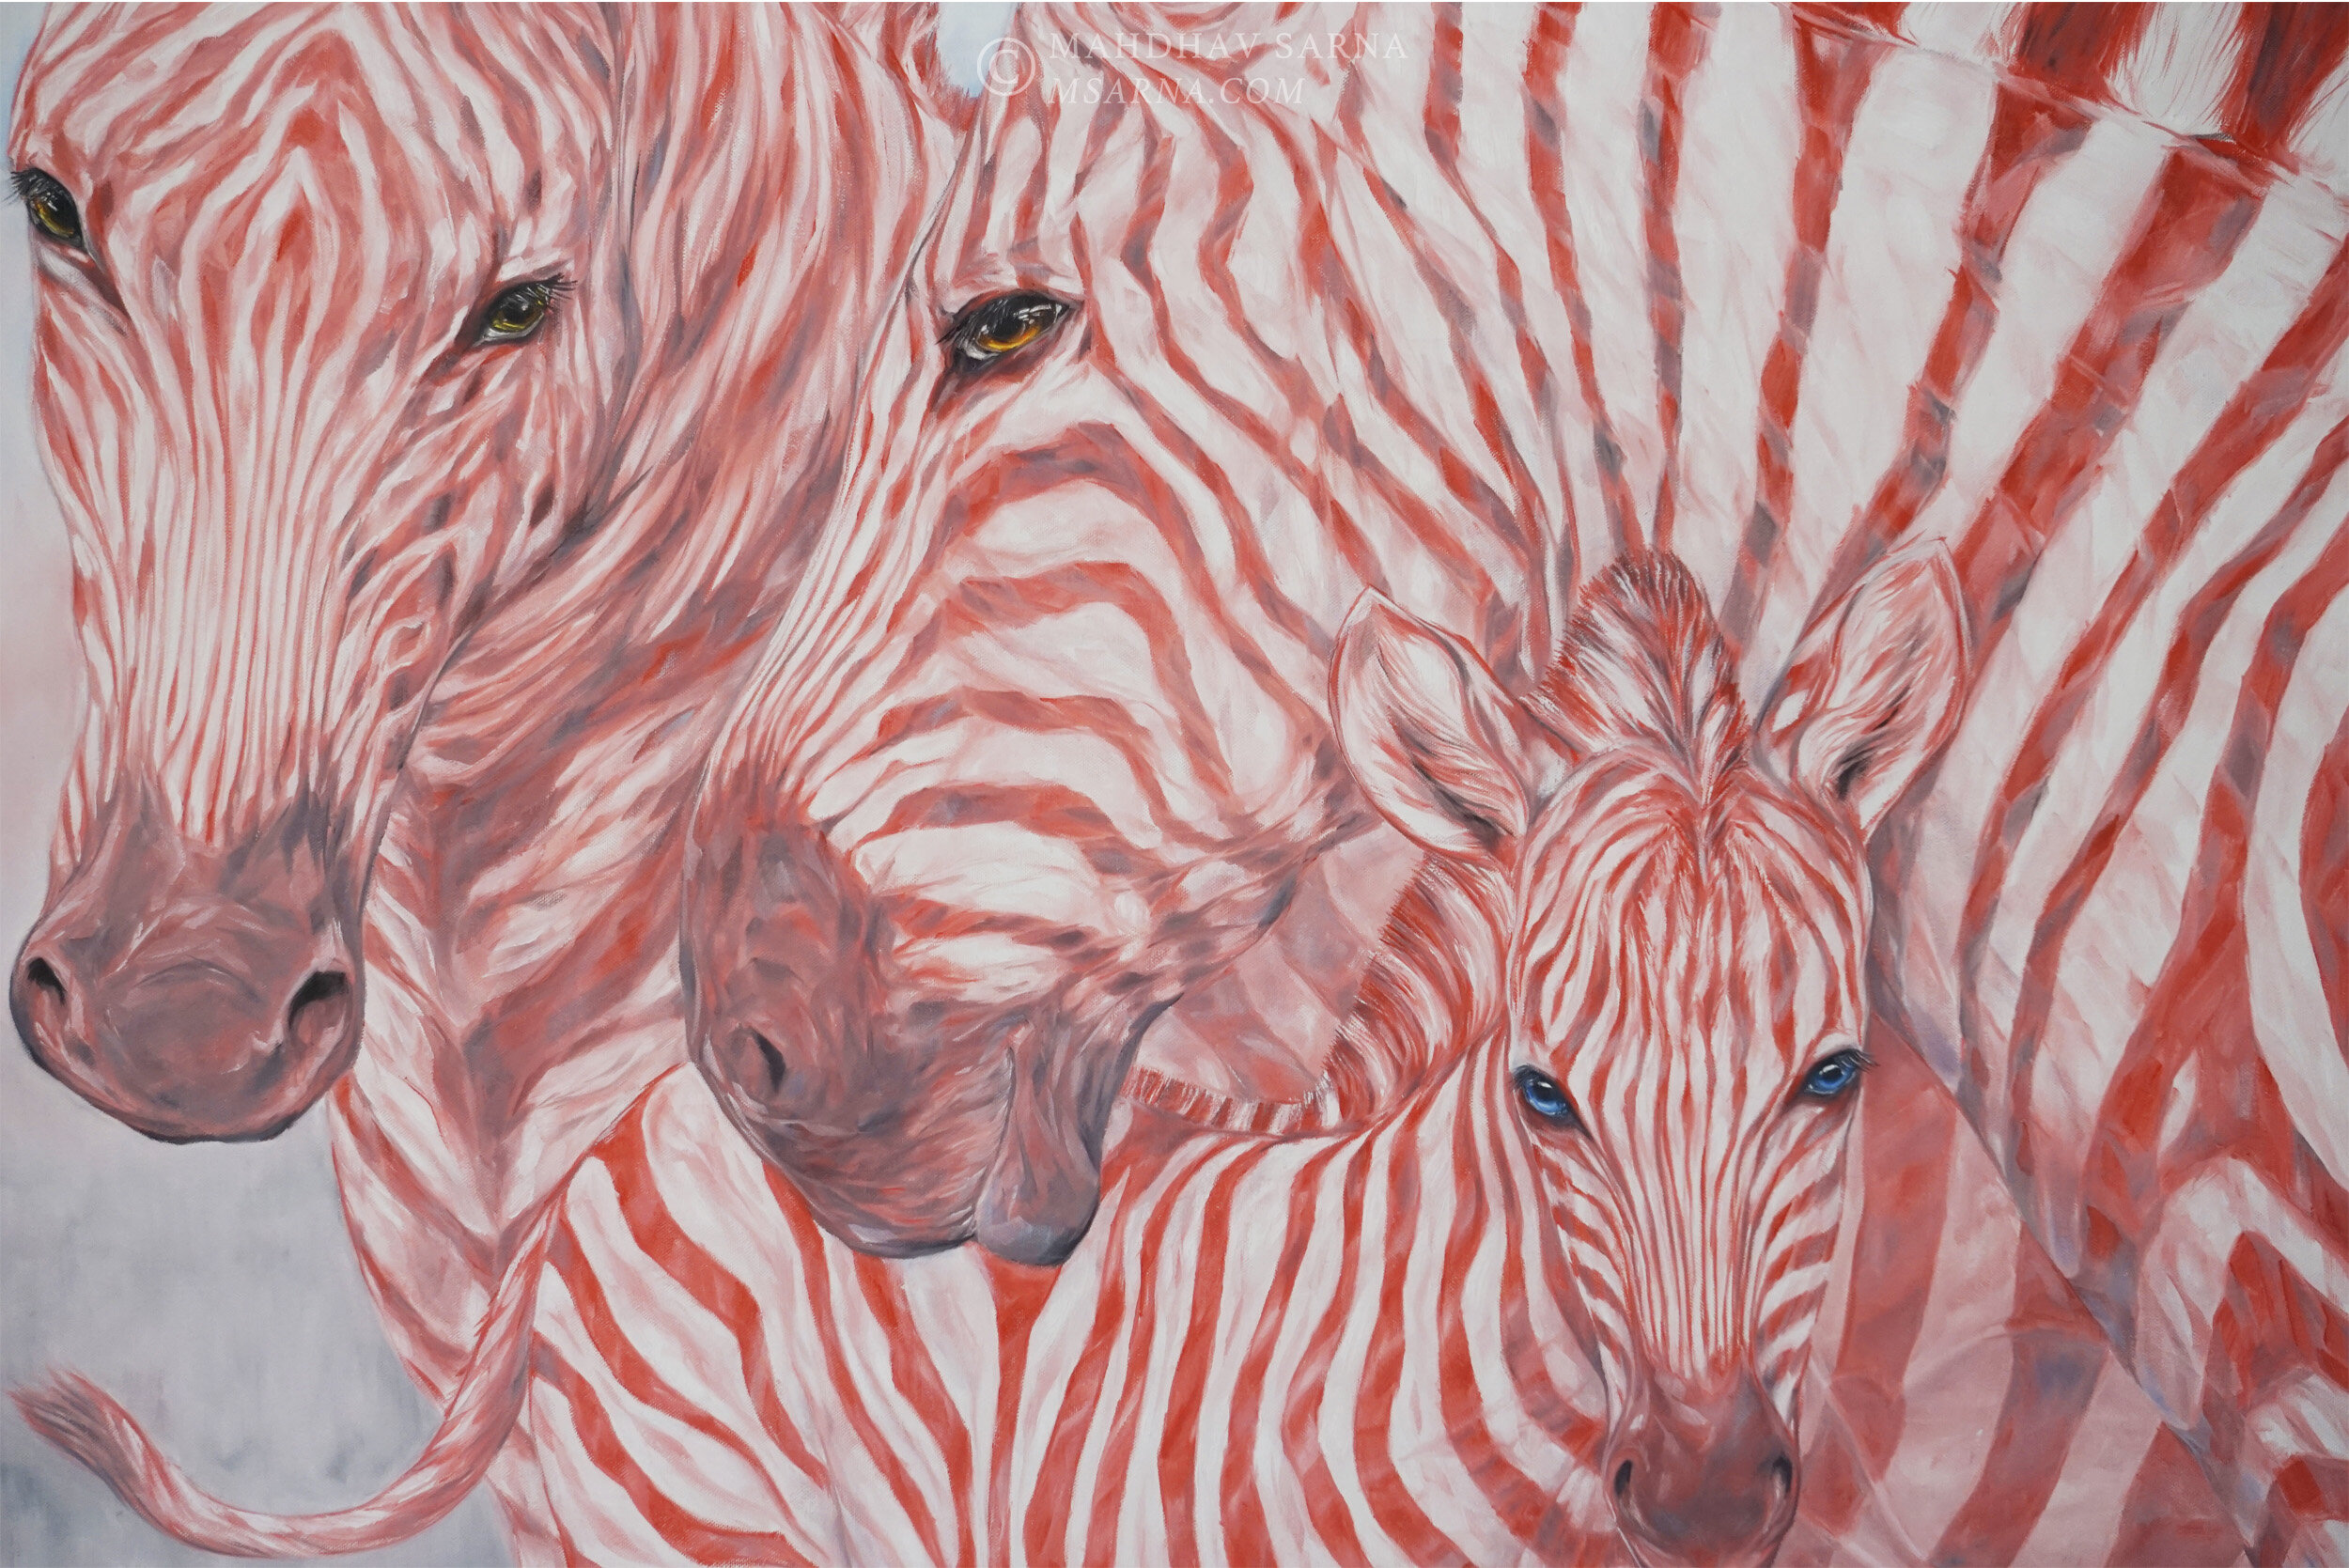 zebra oil painting wifi wildlife art mahdhav sarna 03.jpg